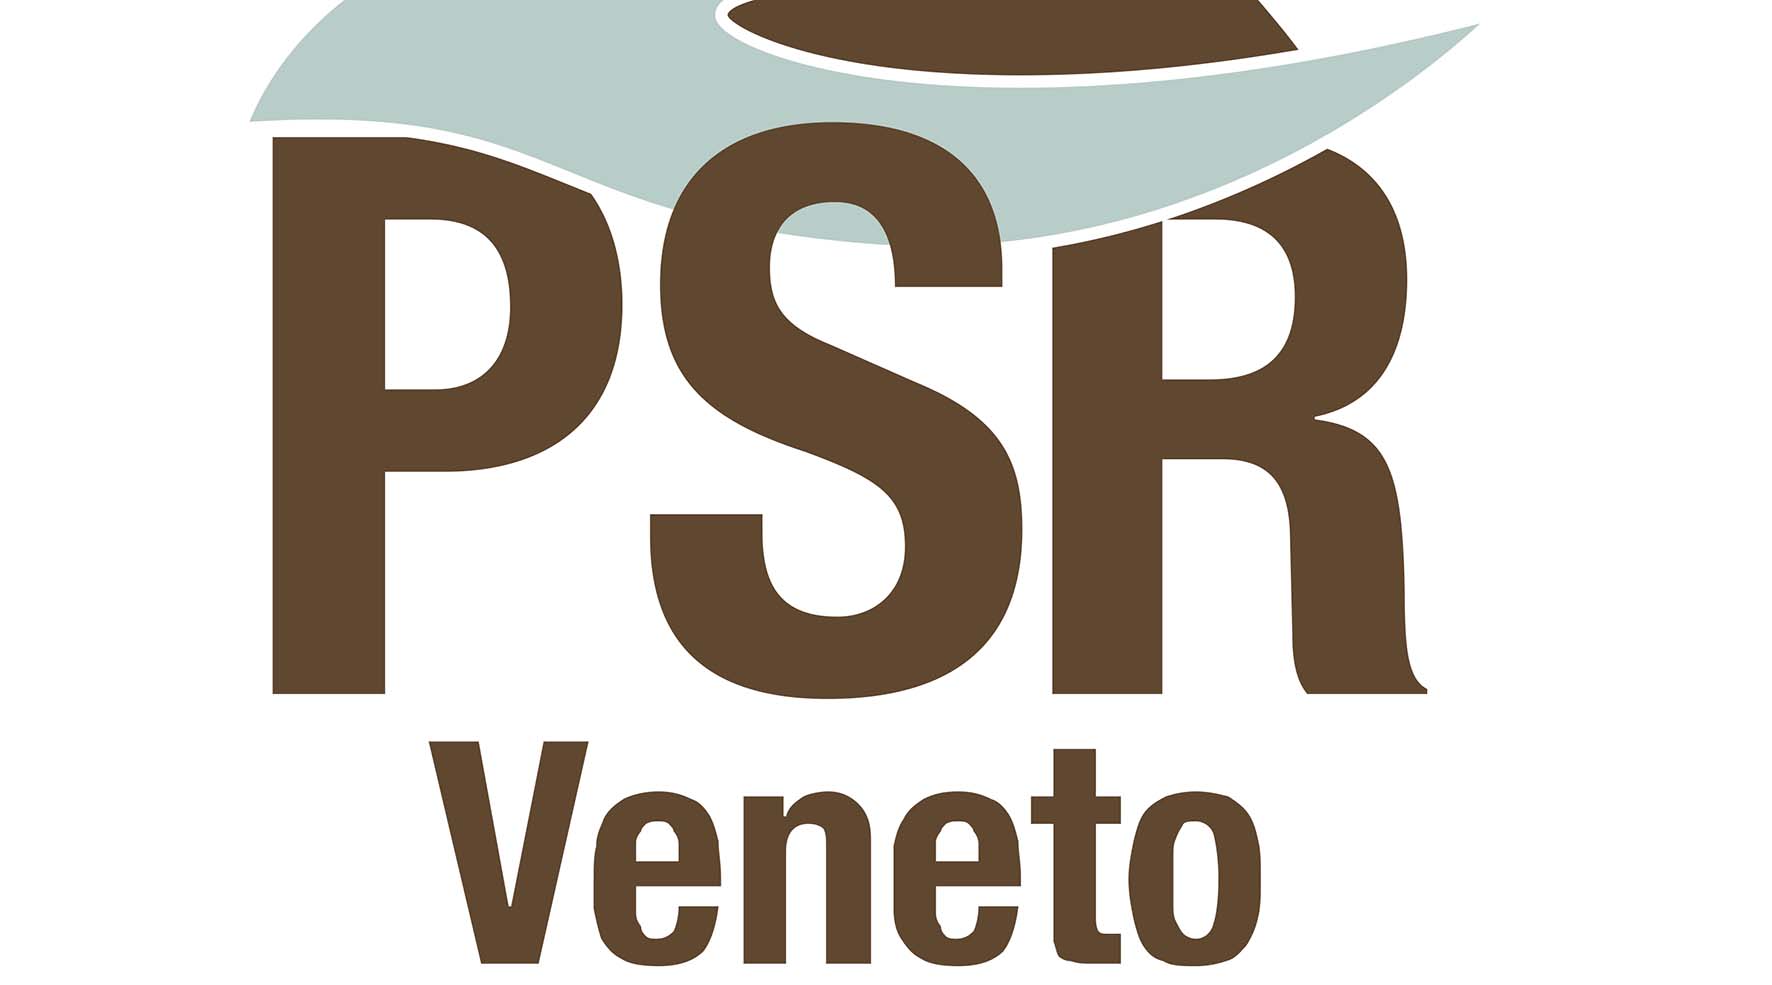 psr veneto 2014-2020 logo